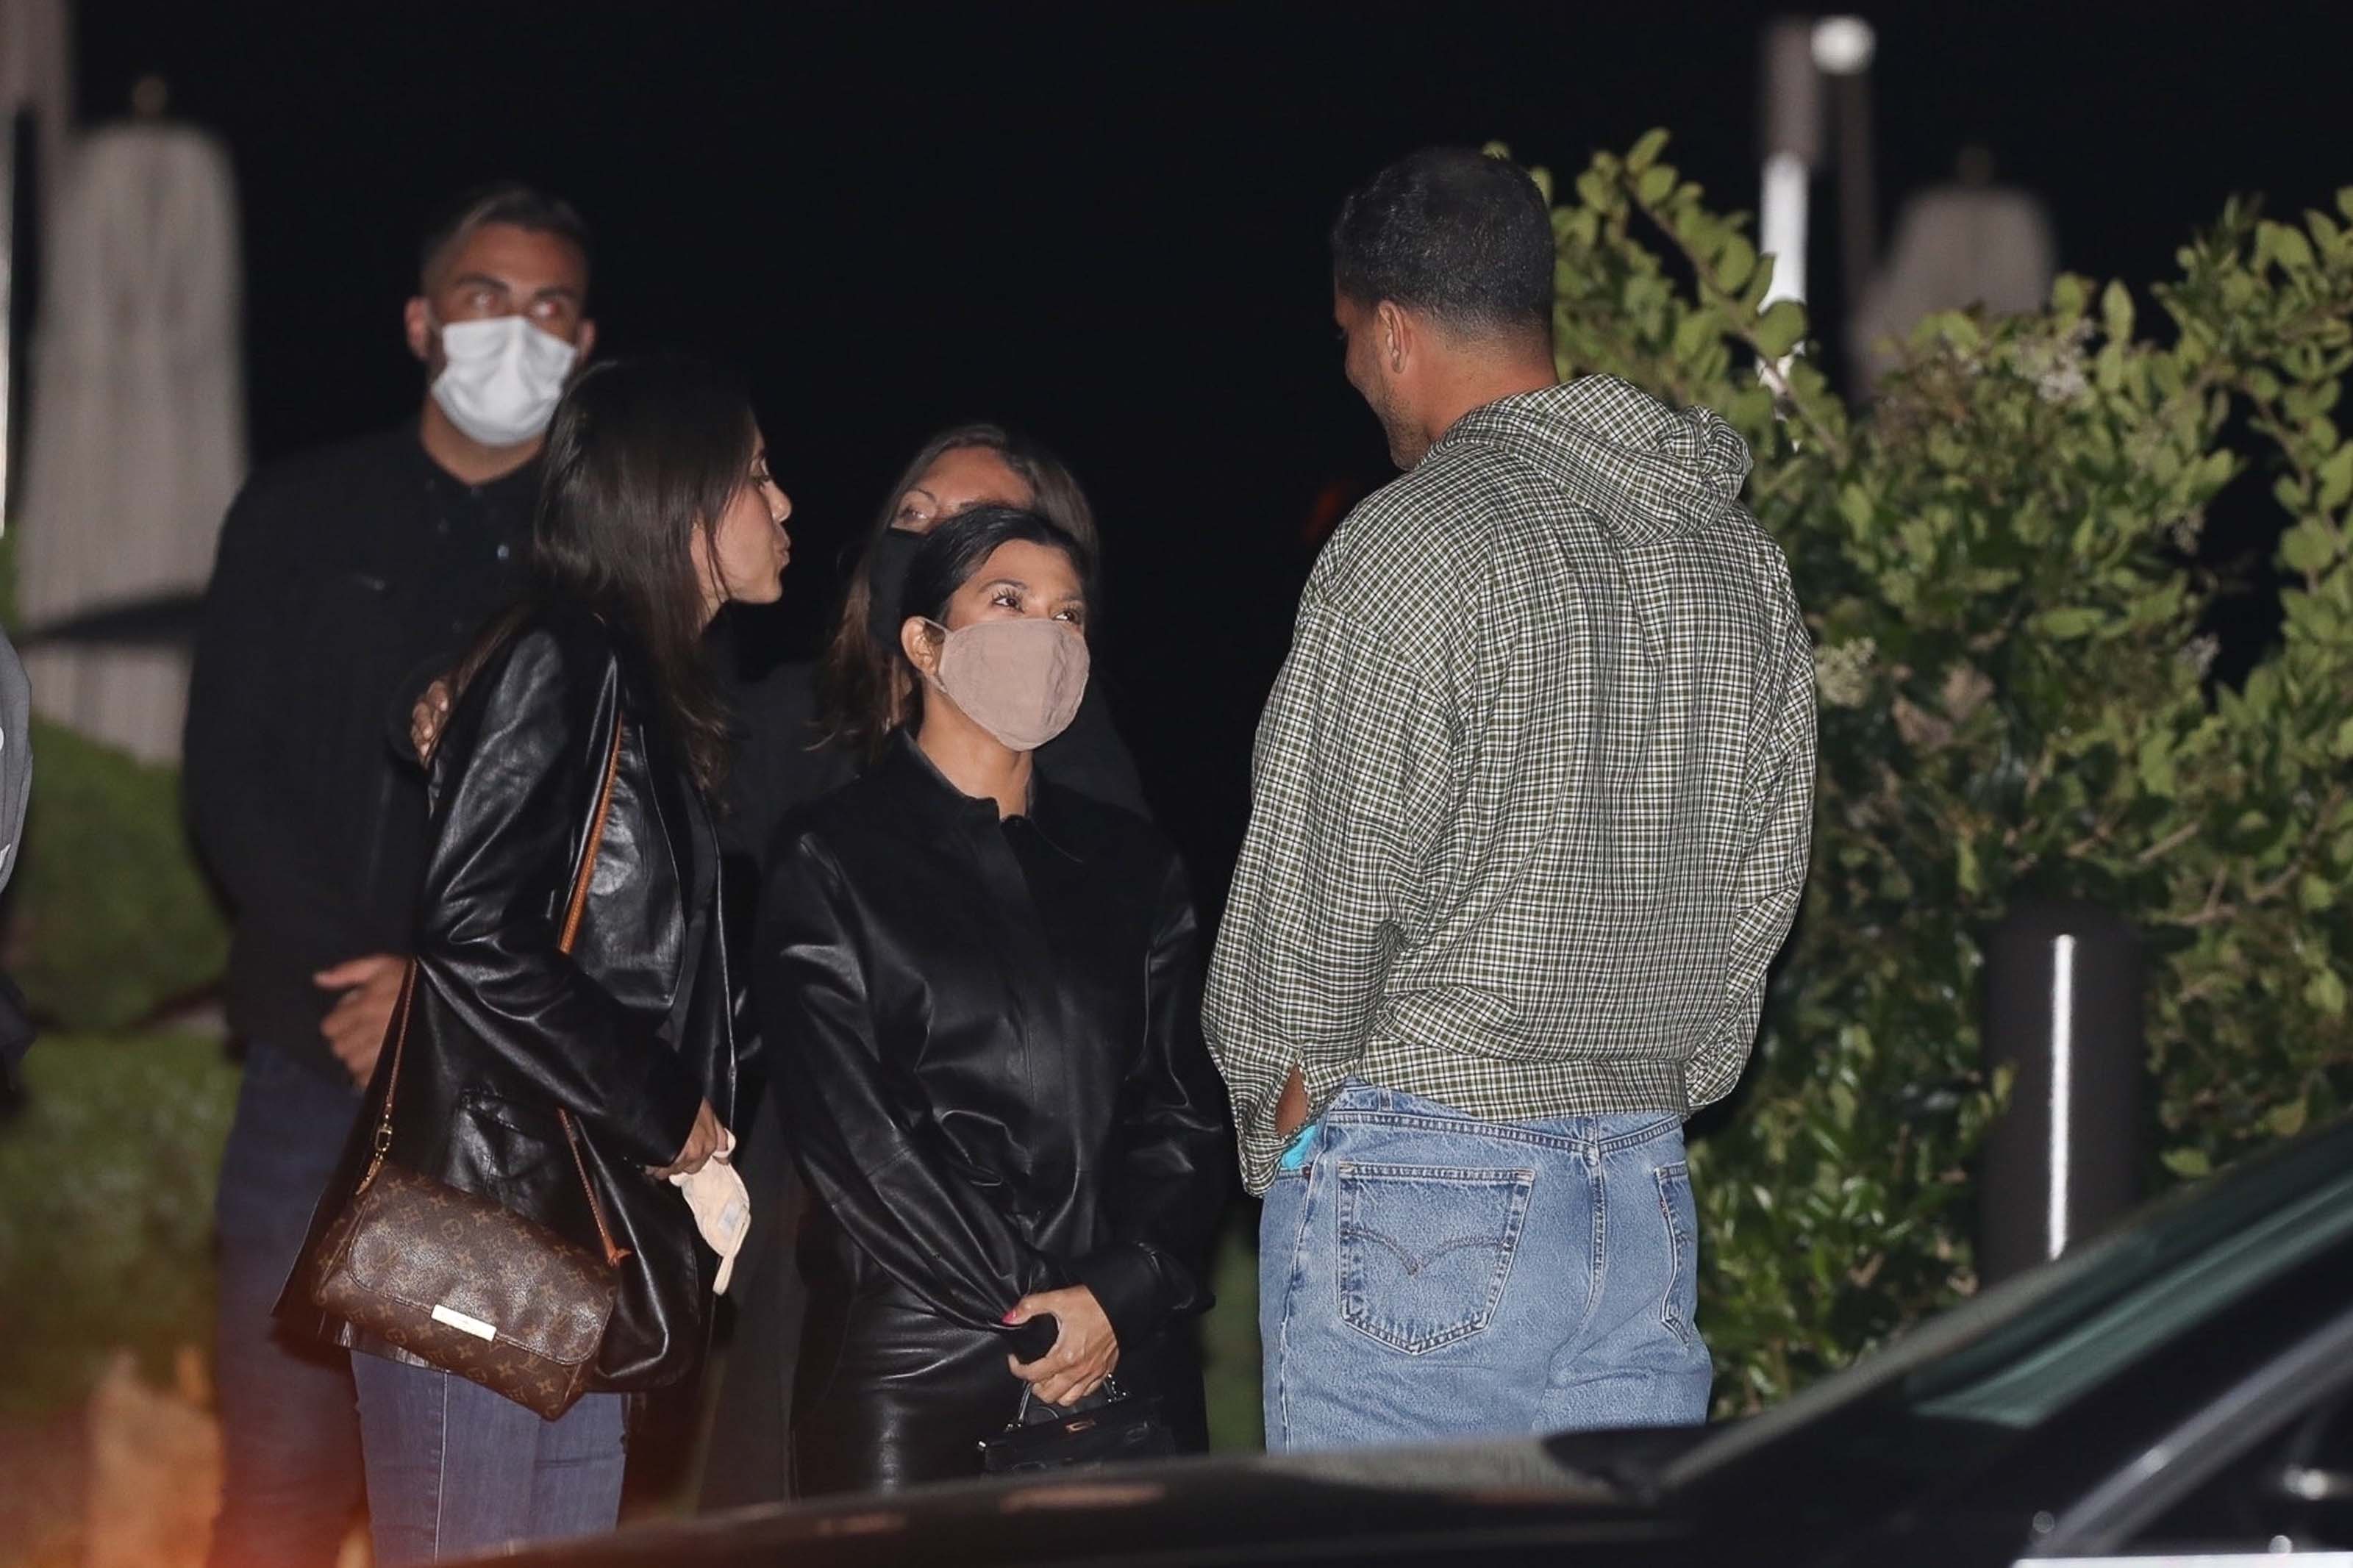 Kourtney Kardashian seen exiting Nobu after having dinner